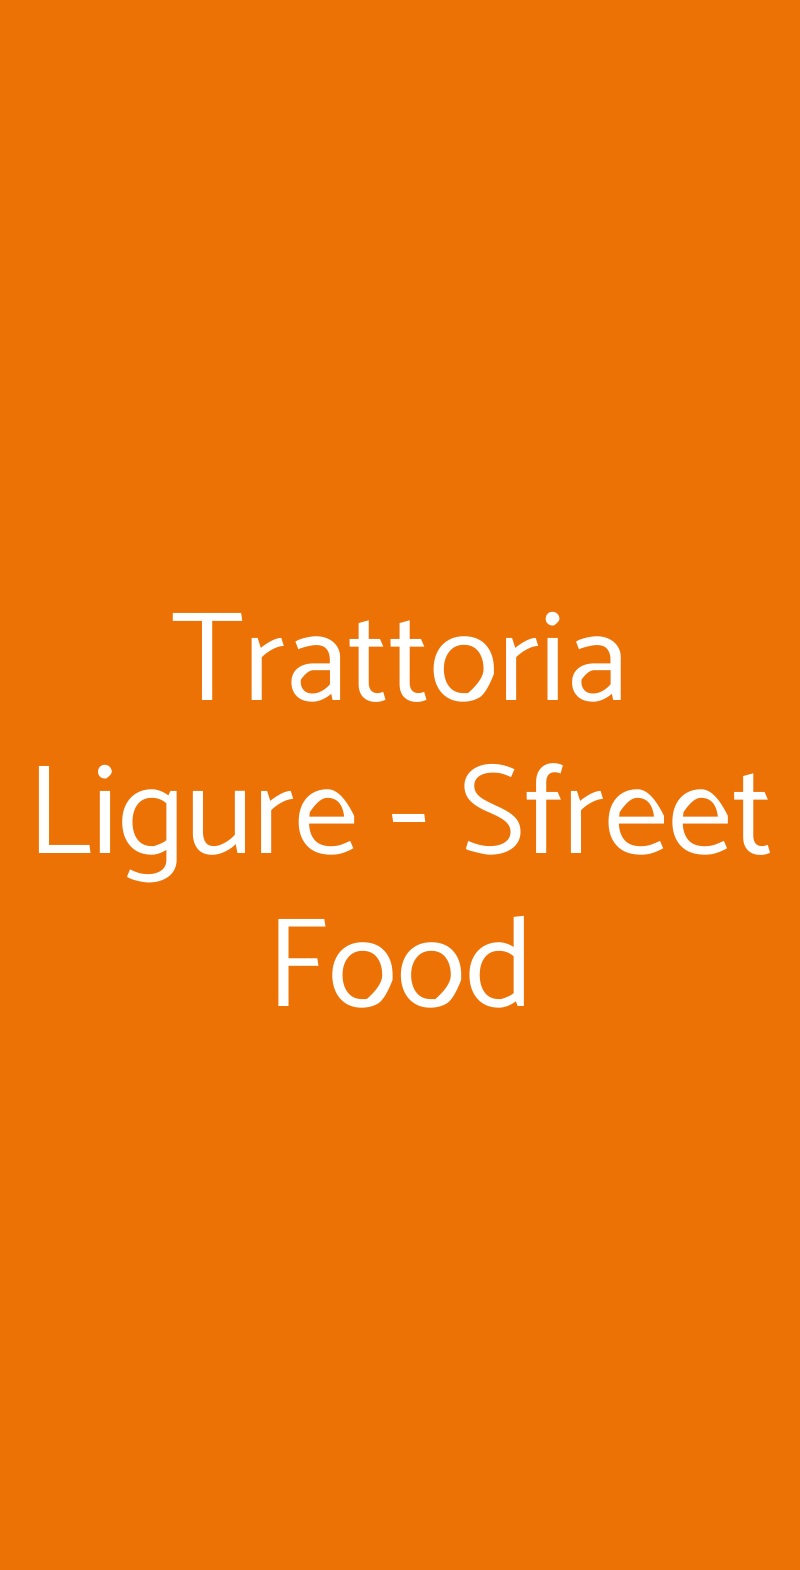 Trattoria Ligure - Sfreet Food Milano menù 1 pagina